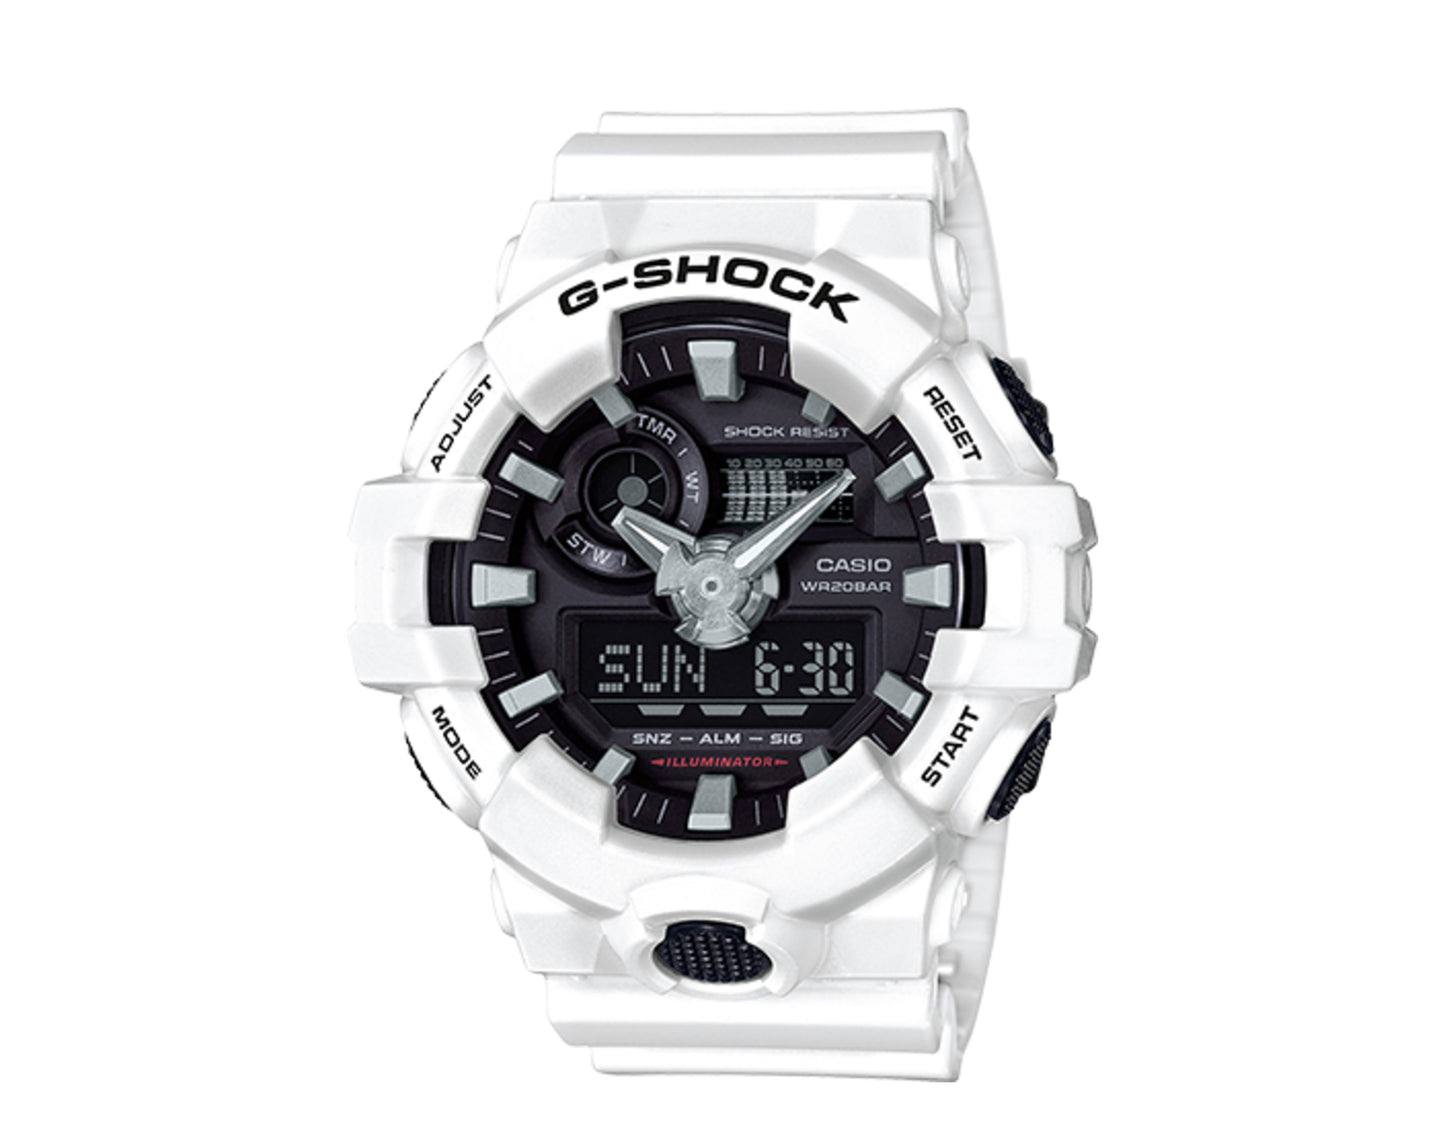 Casio G-Shock GA700 Front Button Analog-Digital White/Black Men's Watch GA700-7A